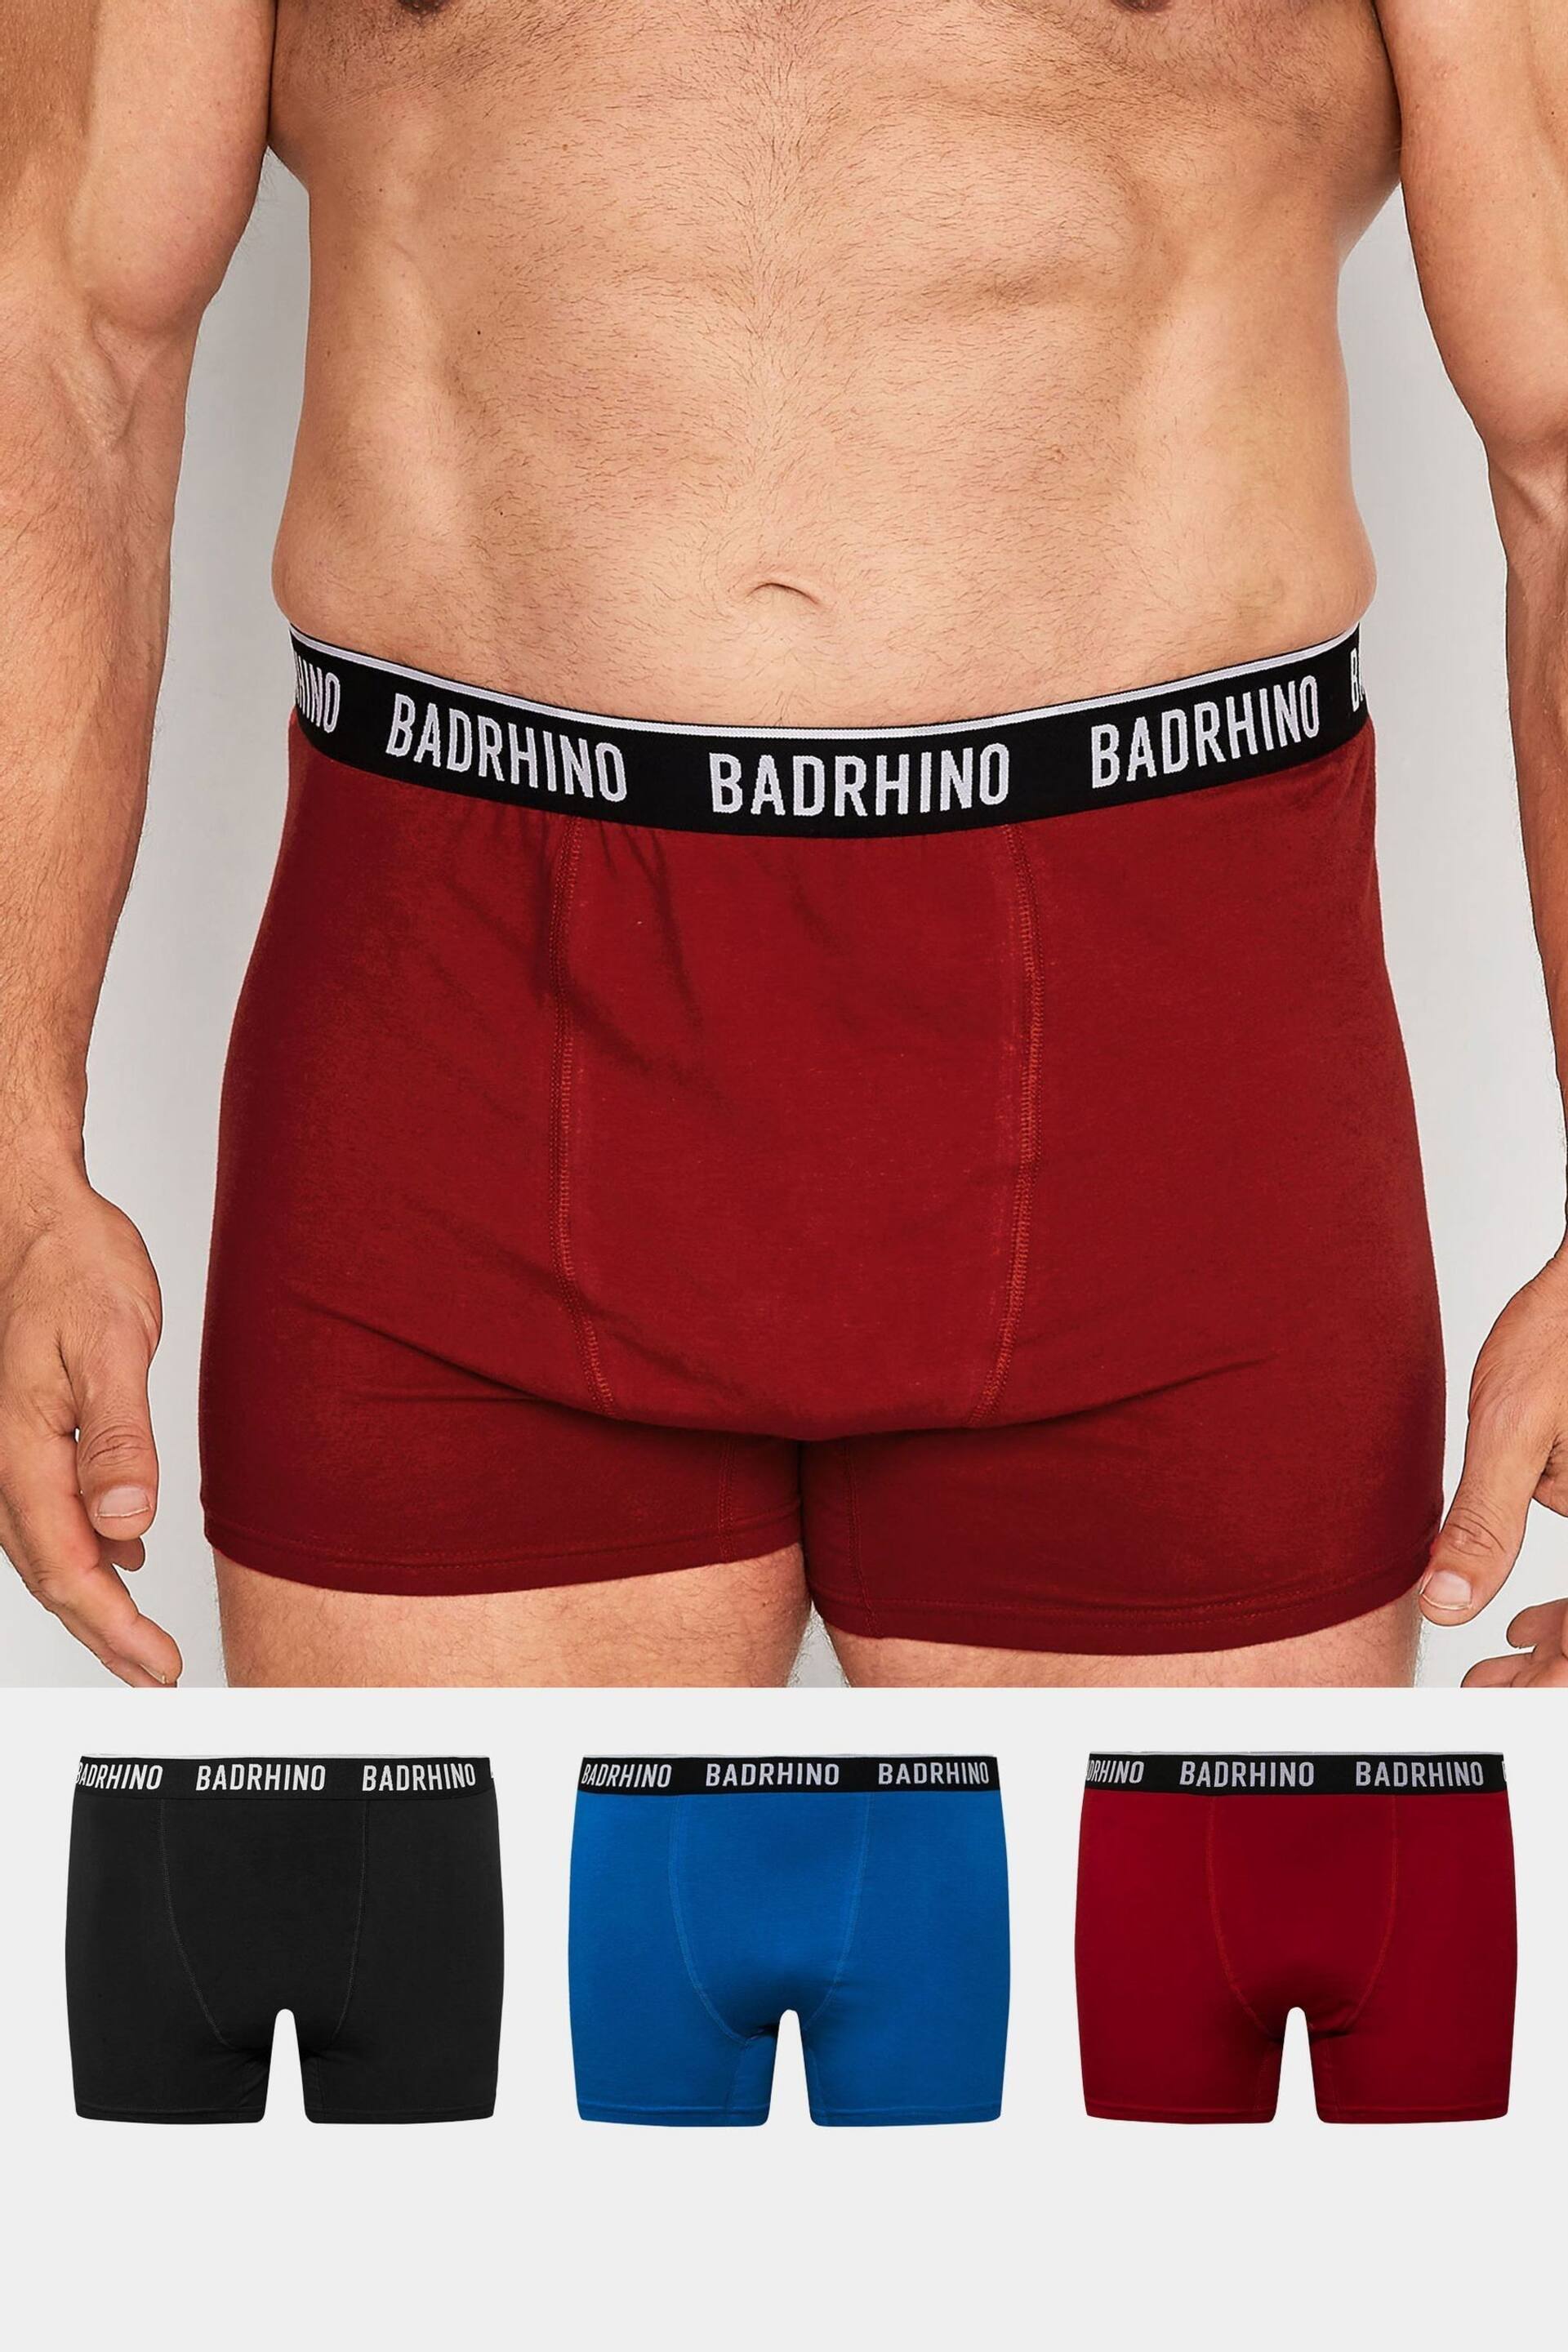 BadRhino Big & Tall Black Boxers 3-Pack - Image 1 of 4